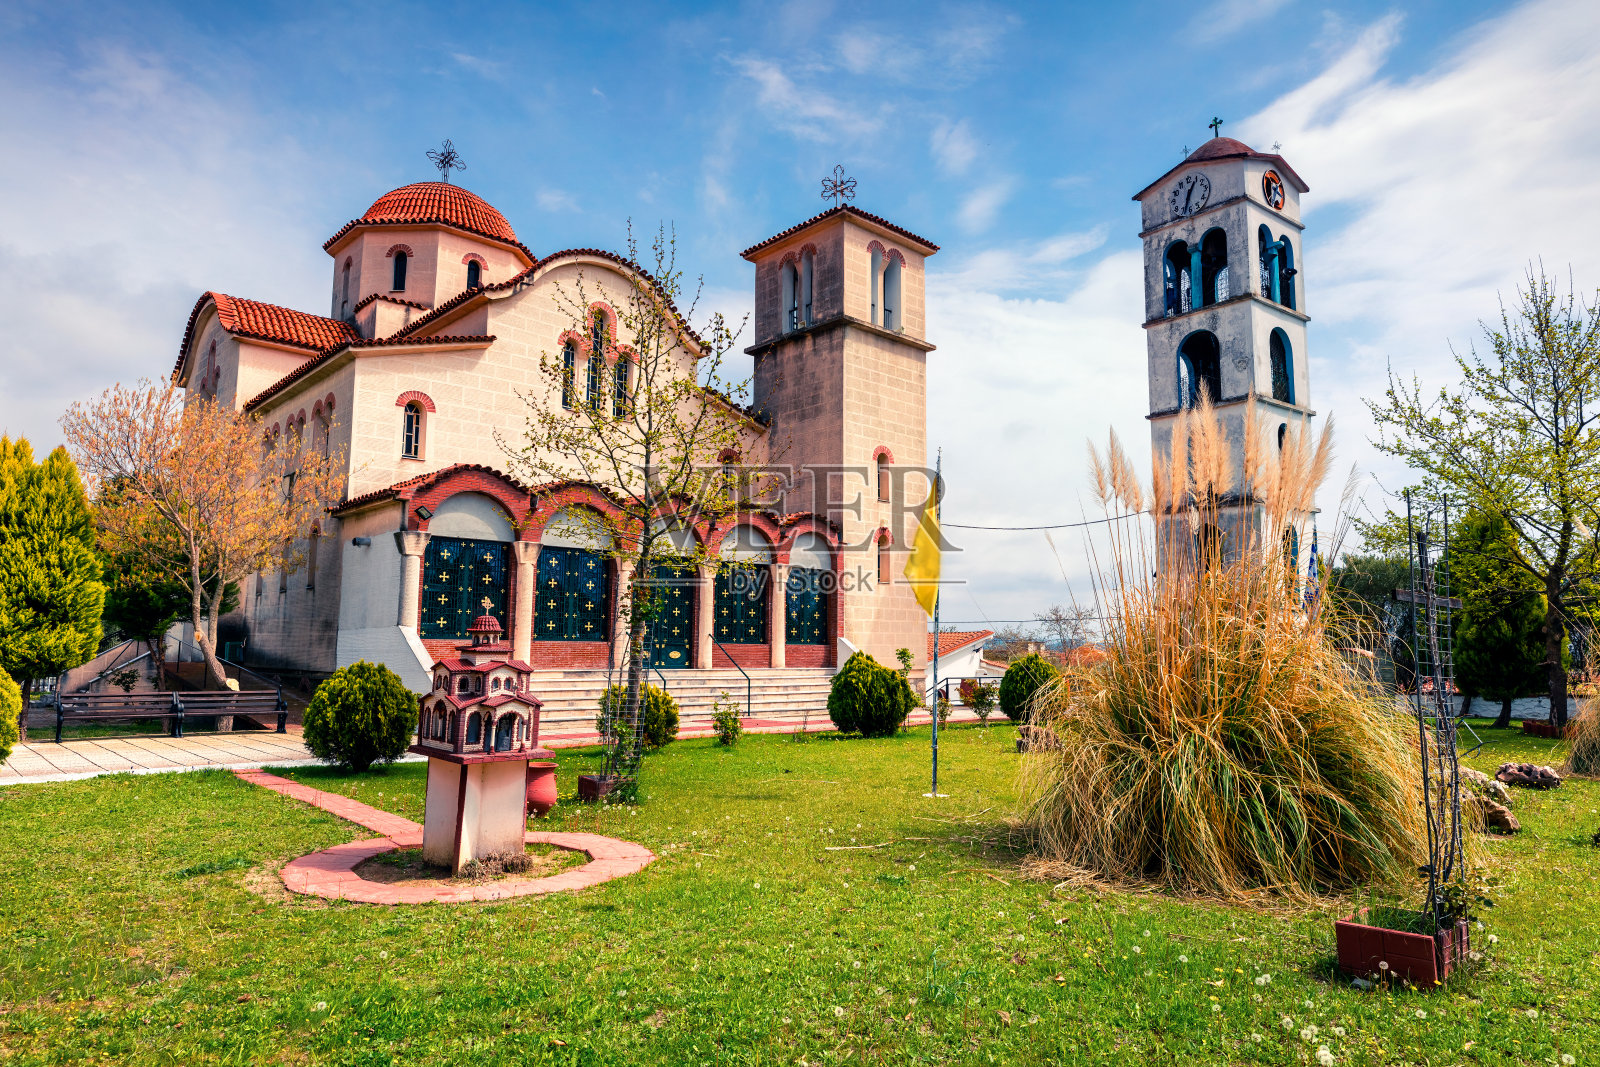 Nea Kerdilia村的小东正教教堂。希腊北部绚丽多彩的春景。卡瓦拉地区美丽的乡村景色。艺术风格后期处理照片照片摄影图片